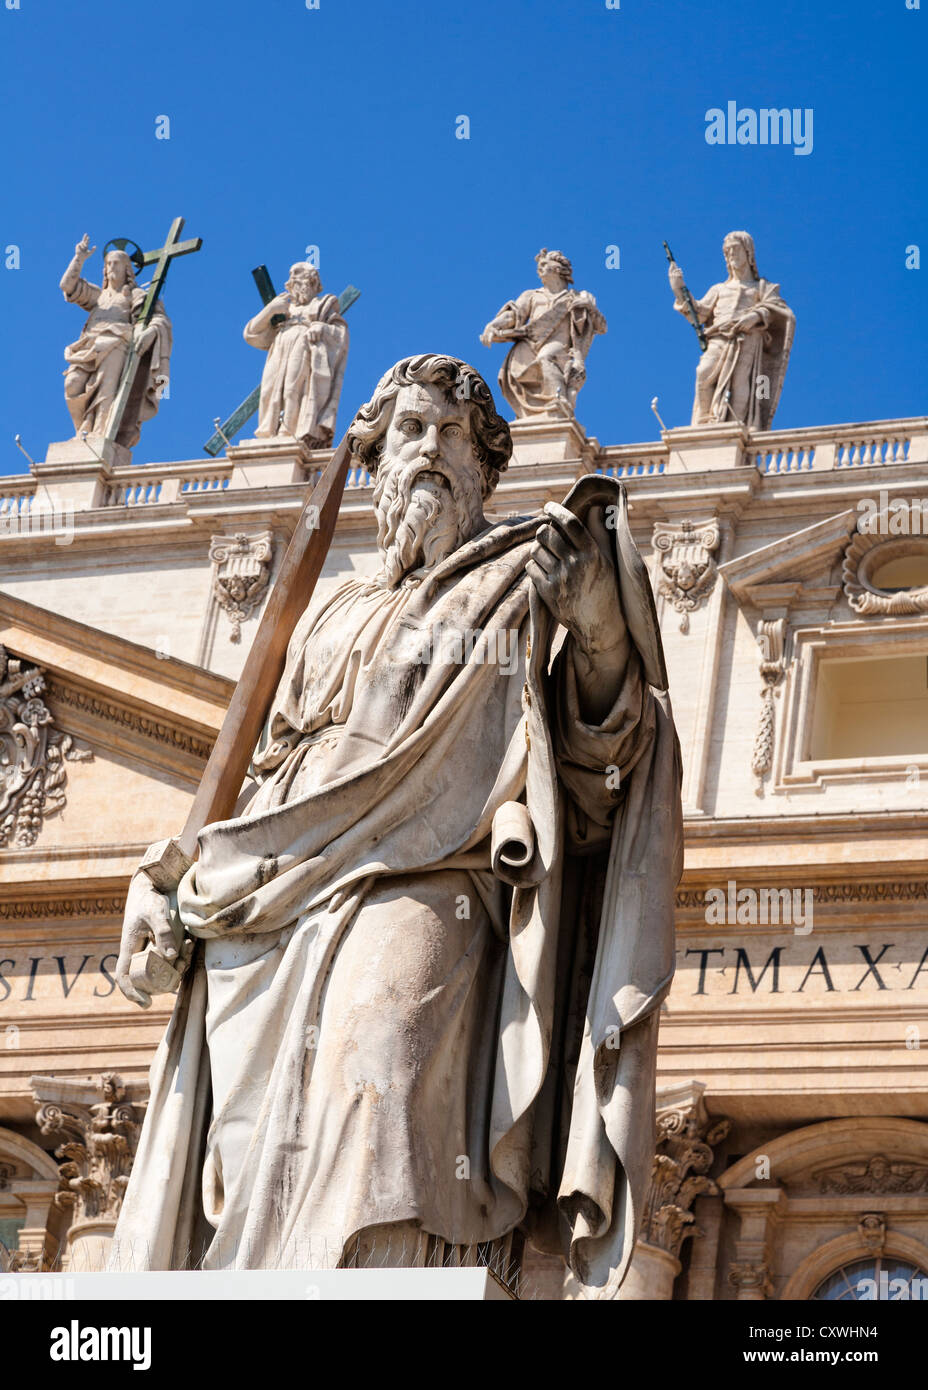 Statue of Saint Paul outside, Saint Peter's Basilica, Vatican City, Rome, Italy. Stock Photo